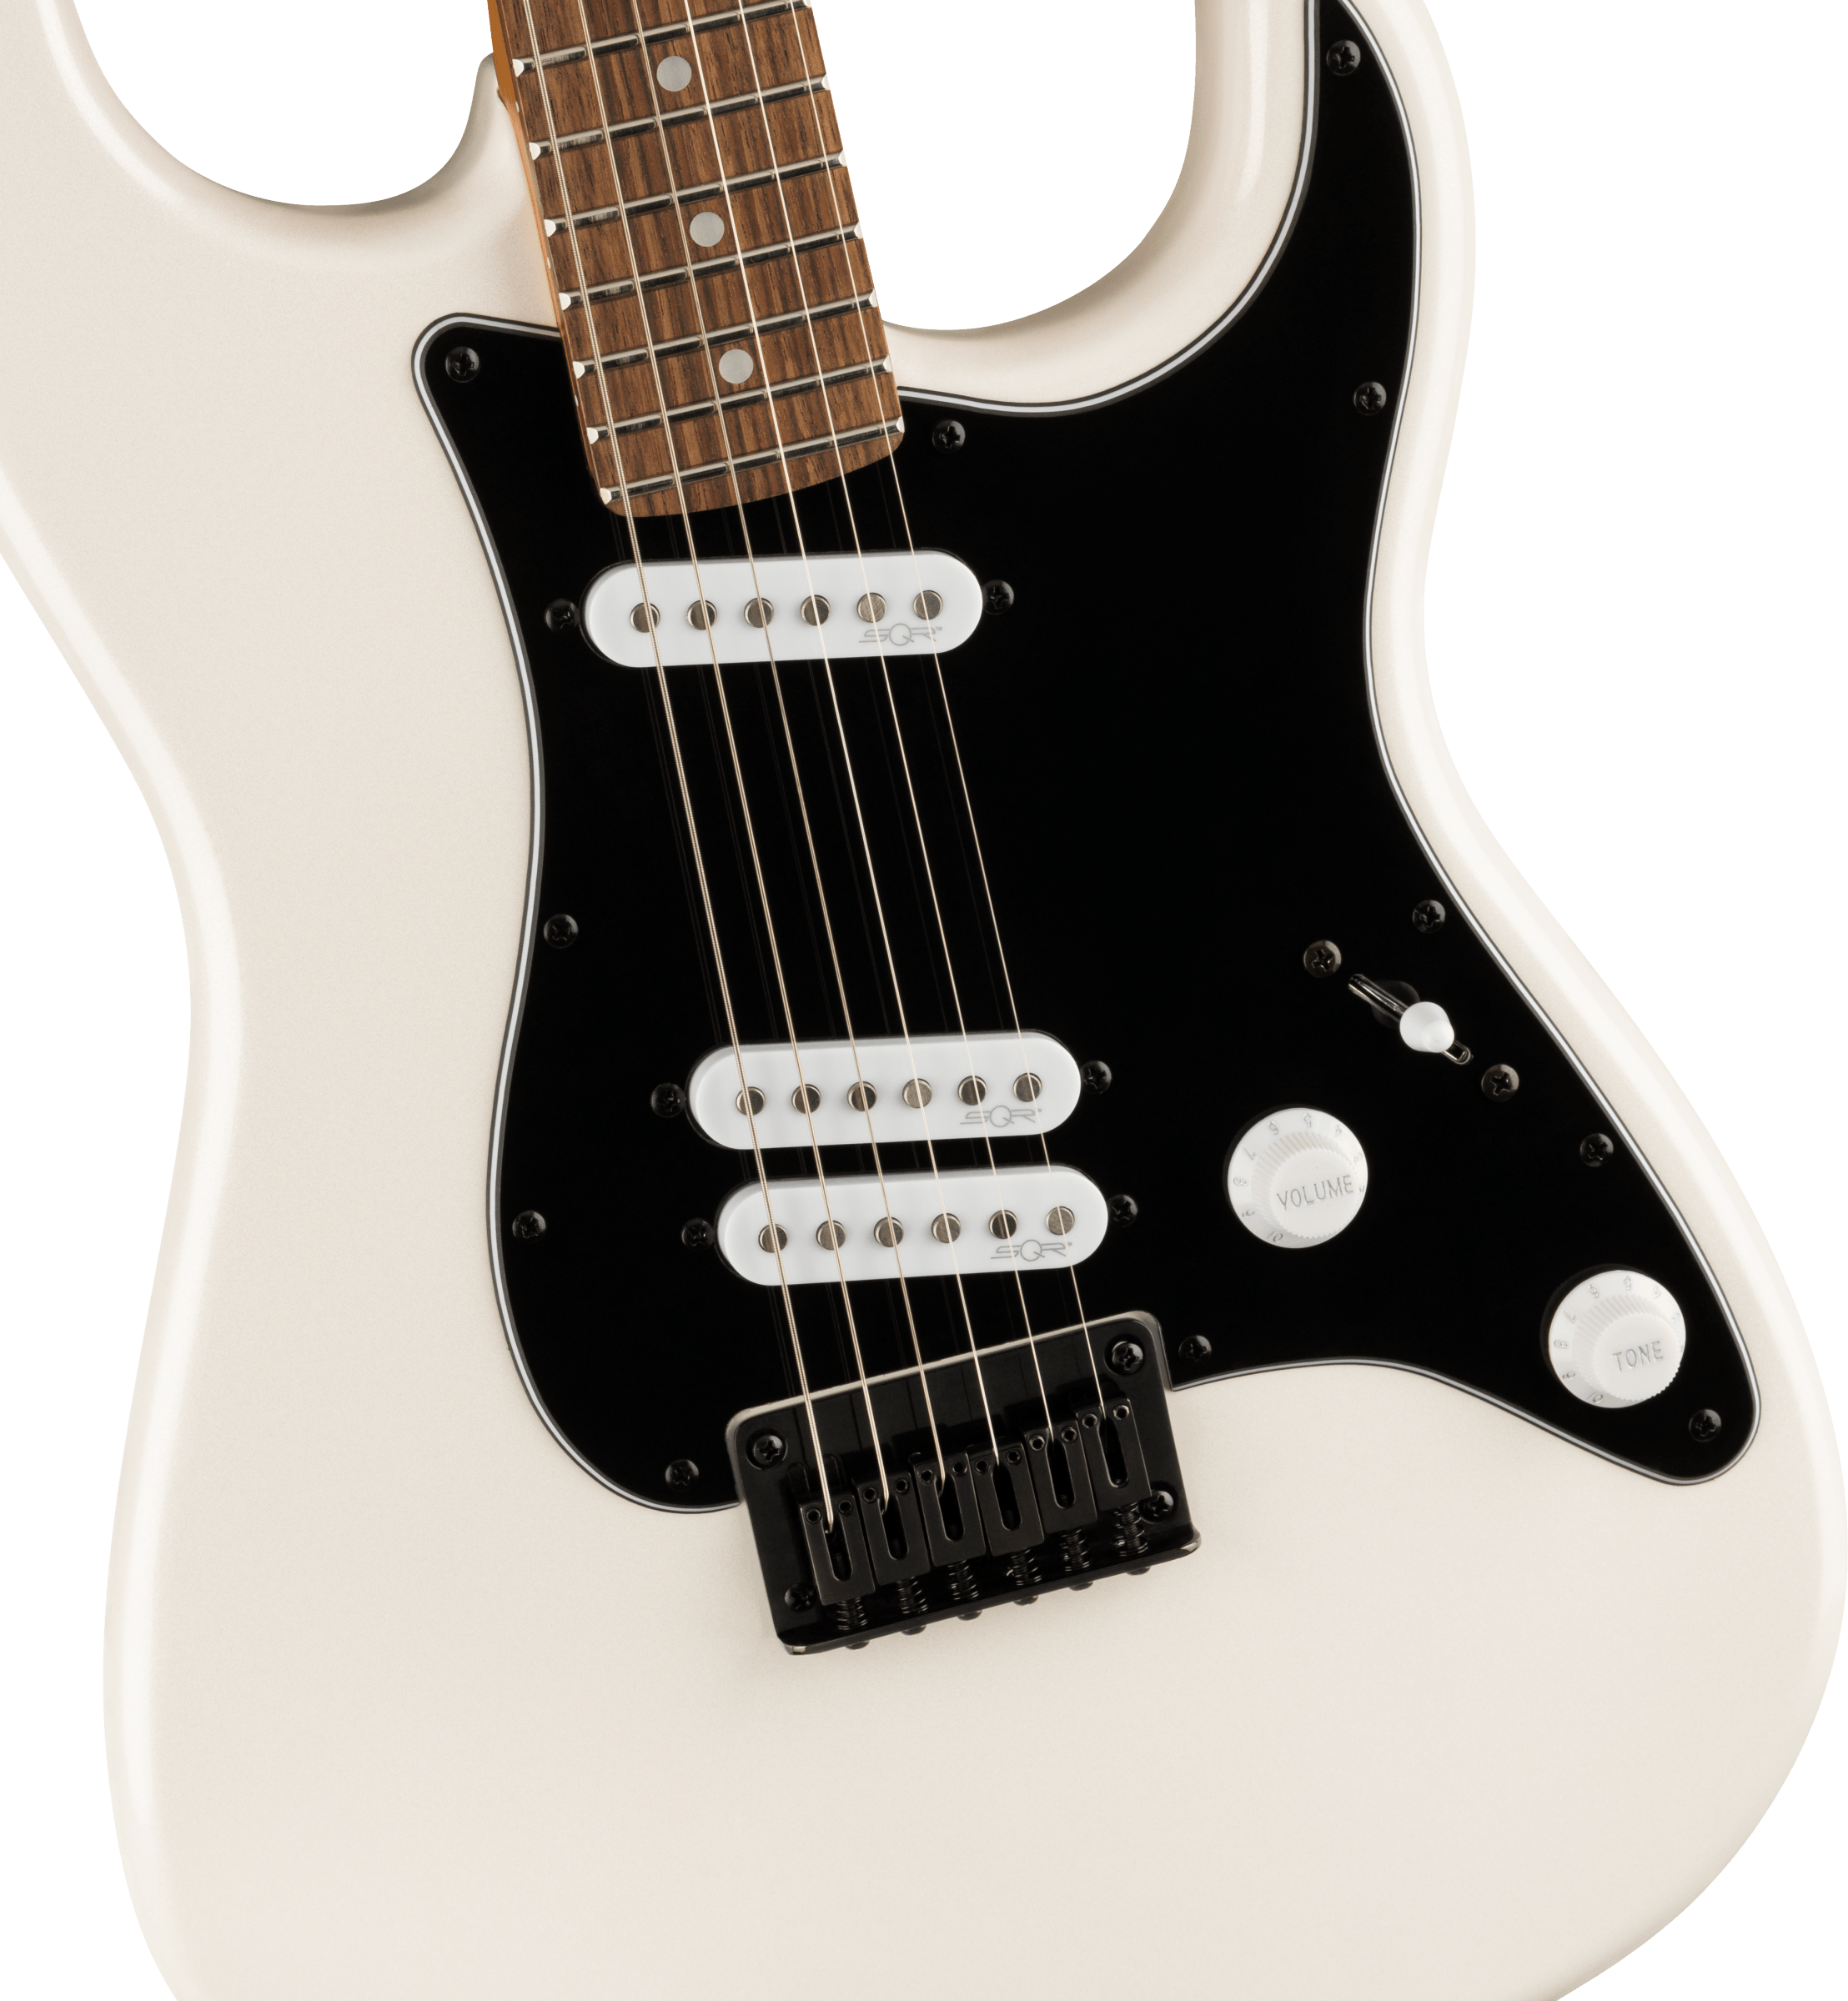 Squier Contemporary Stratocaster Special, Pearl White